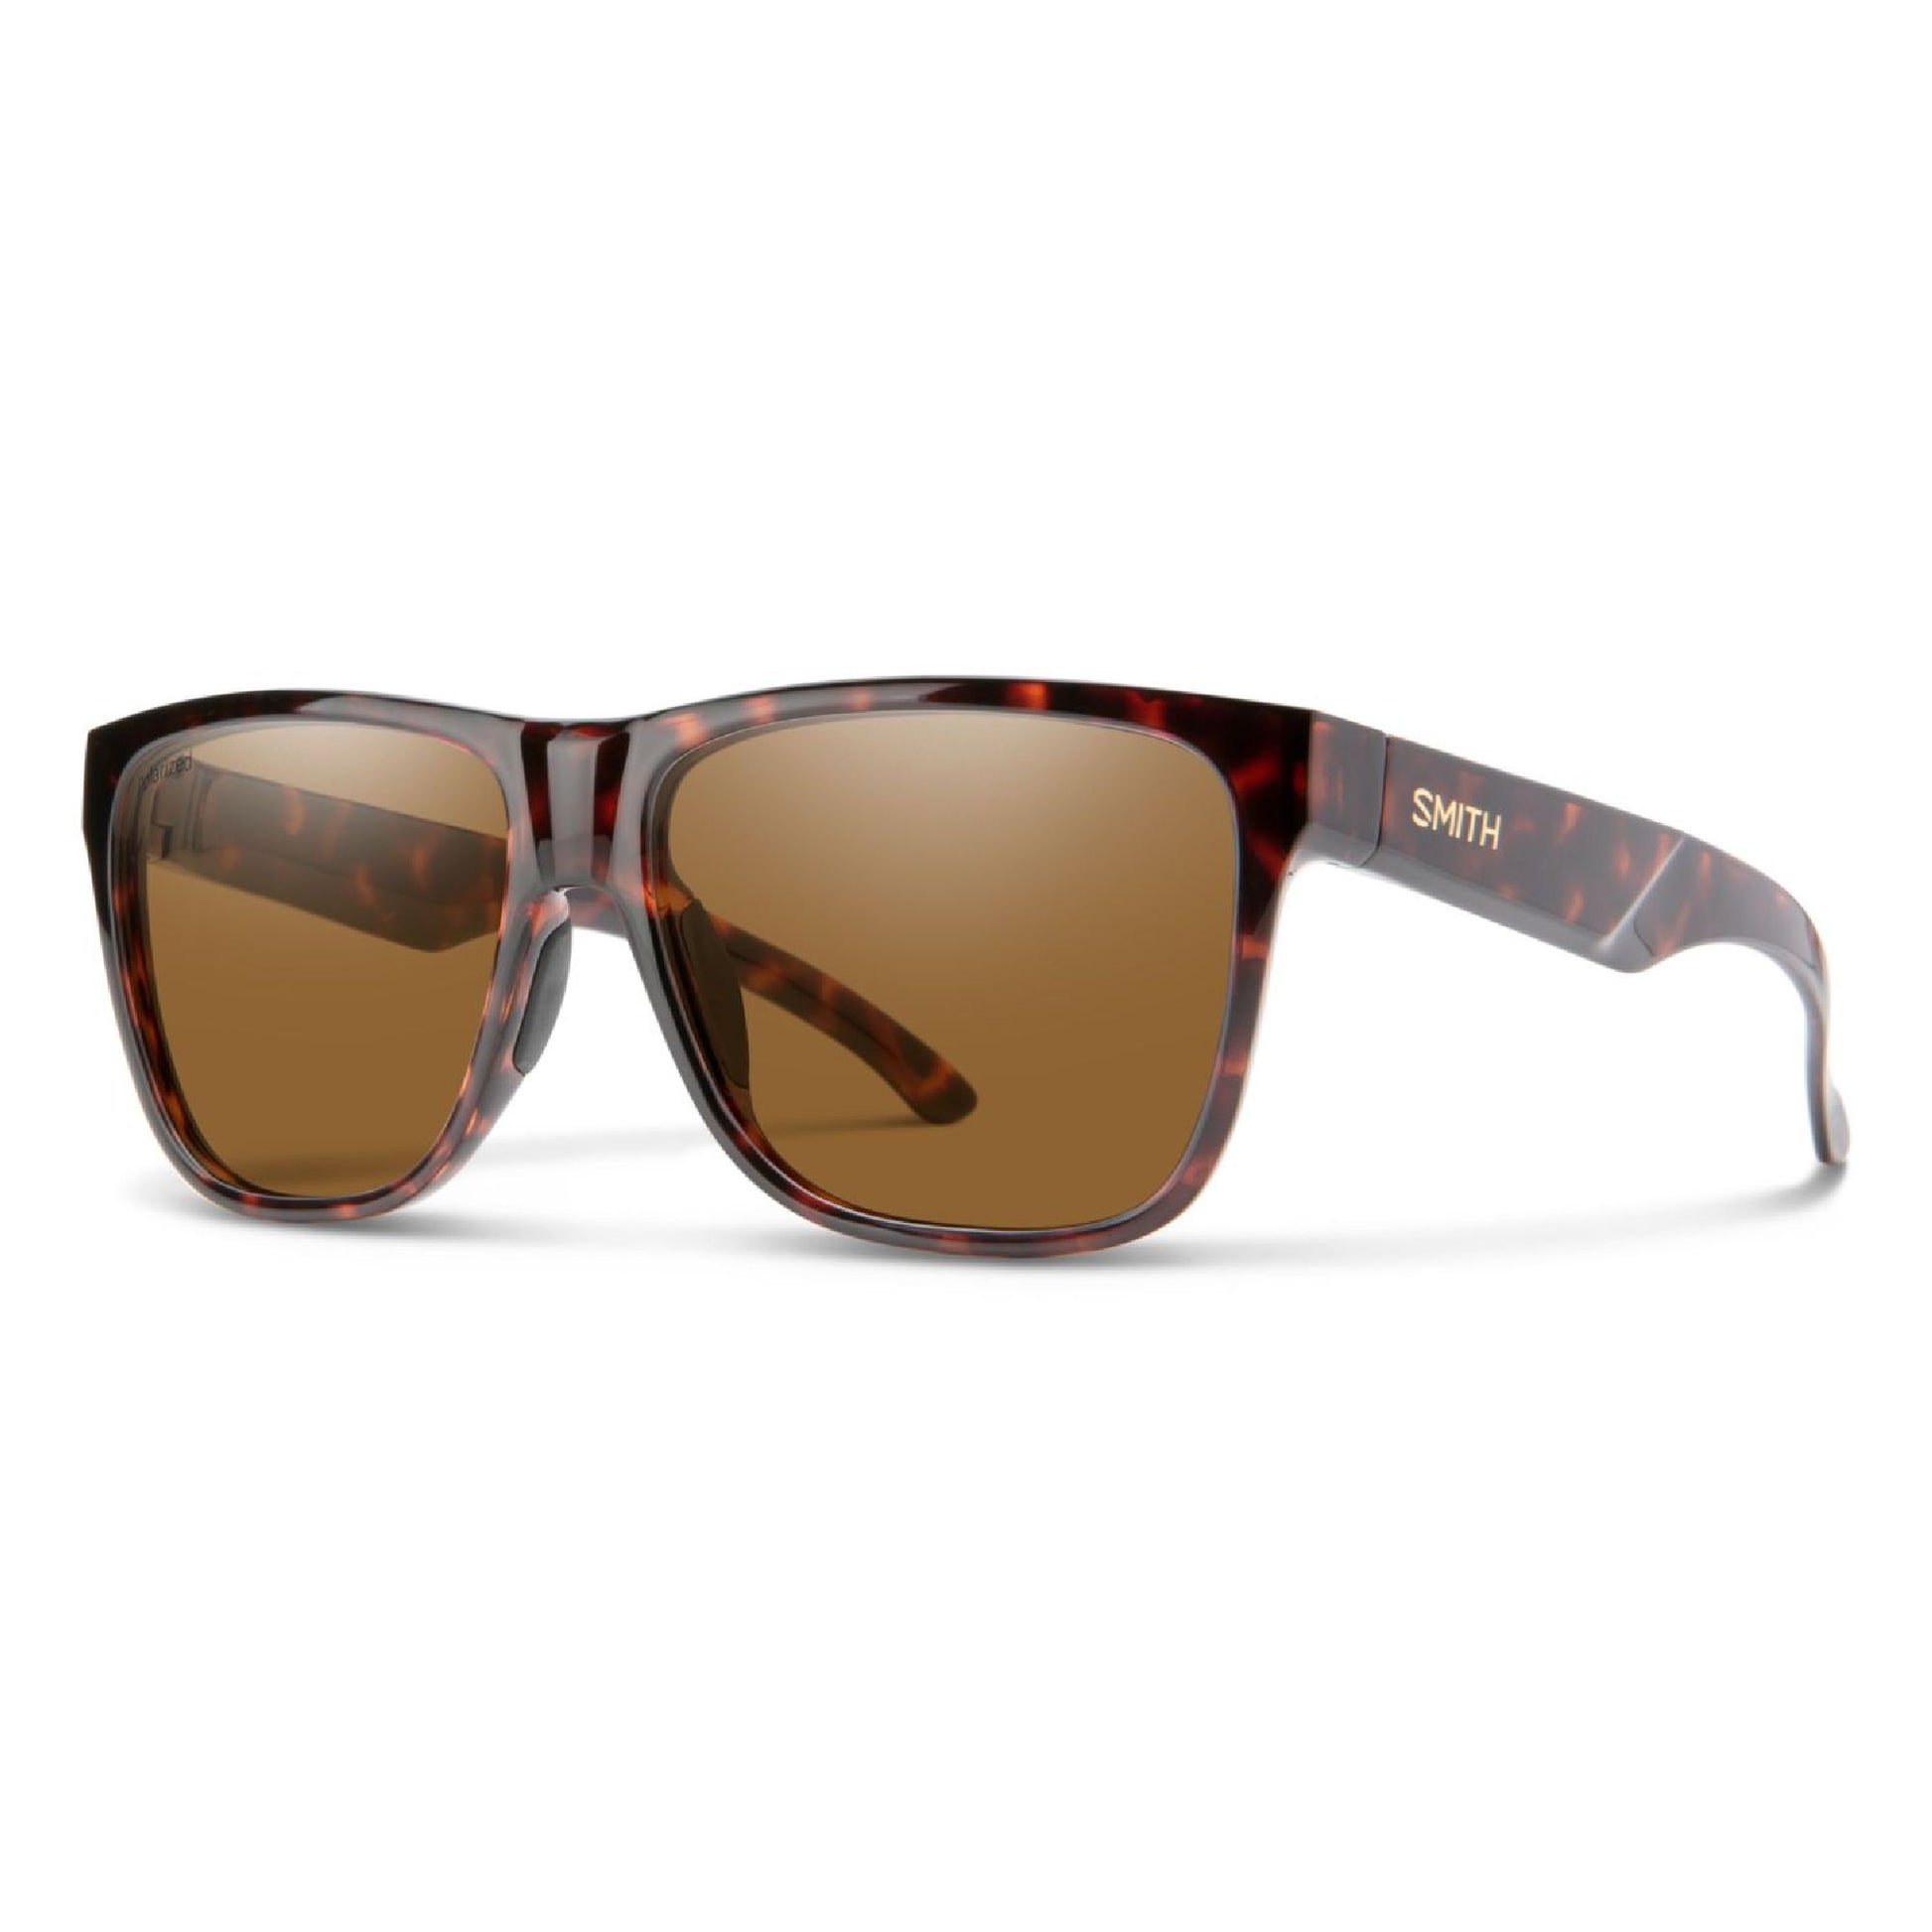 Smith Lowdown XL 2 Sunglasses Tortoise Polarized Brown Sunglasses